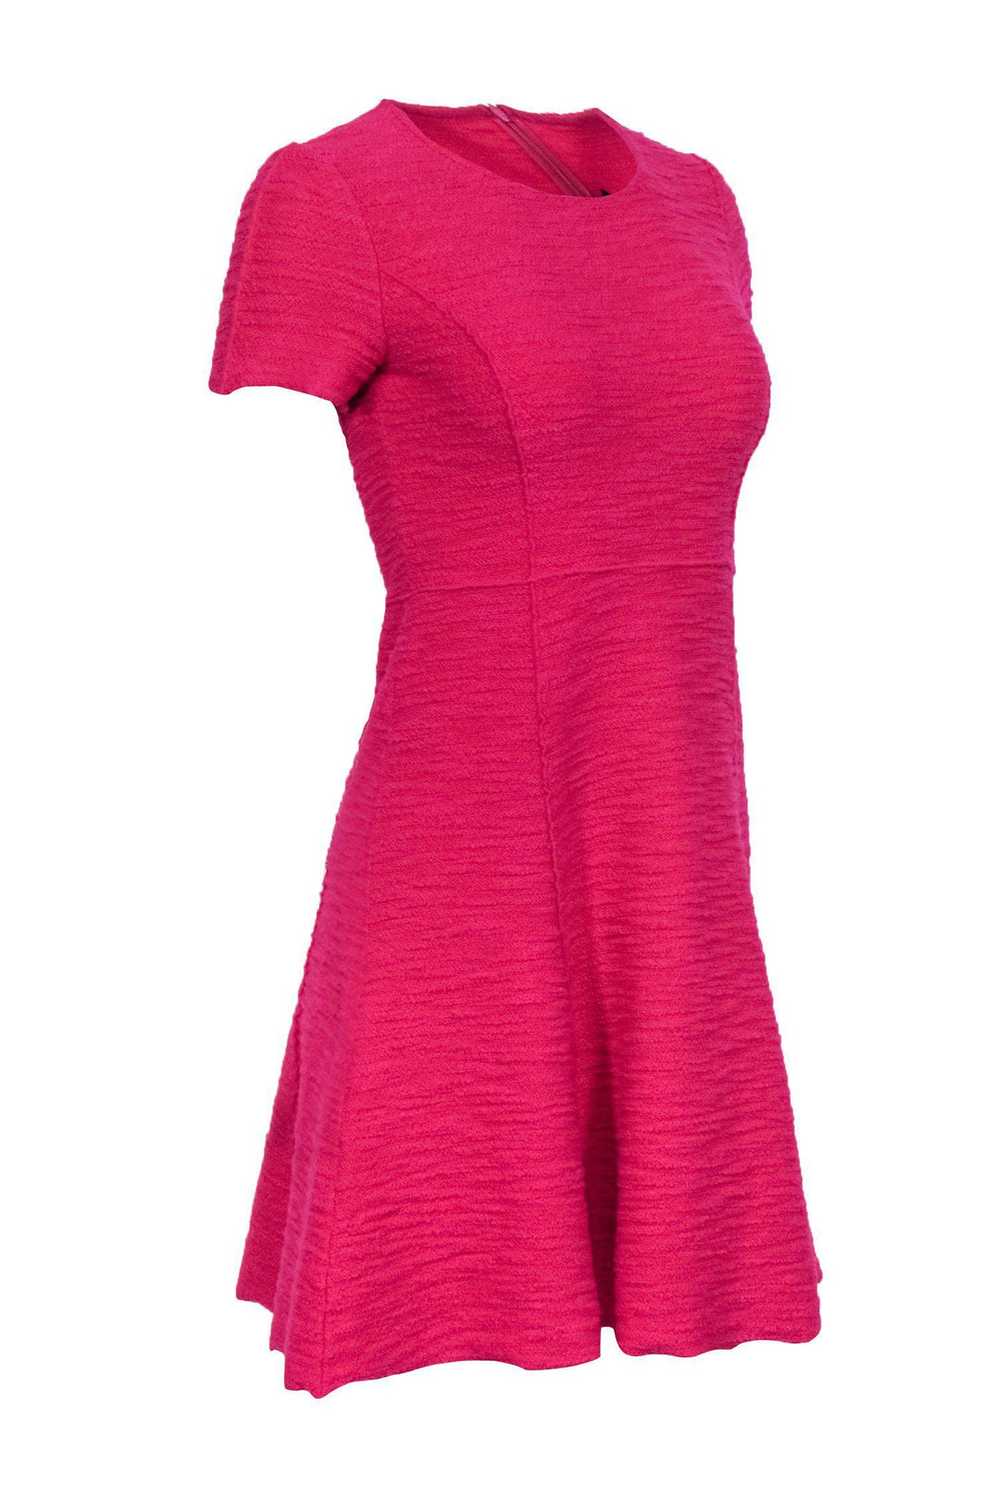 St. John - Hot Pink Short Sleeved Flared Textured… - image 2